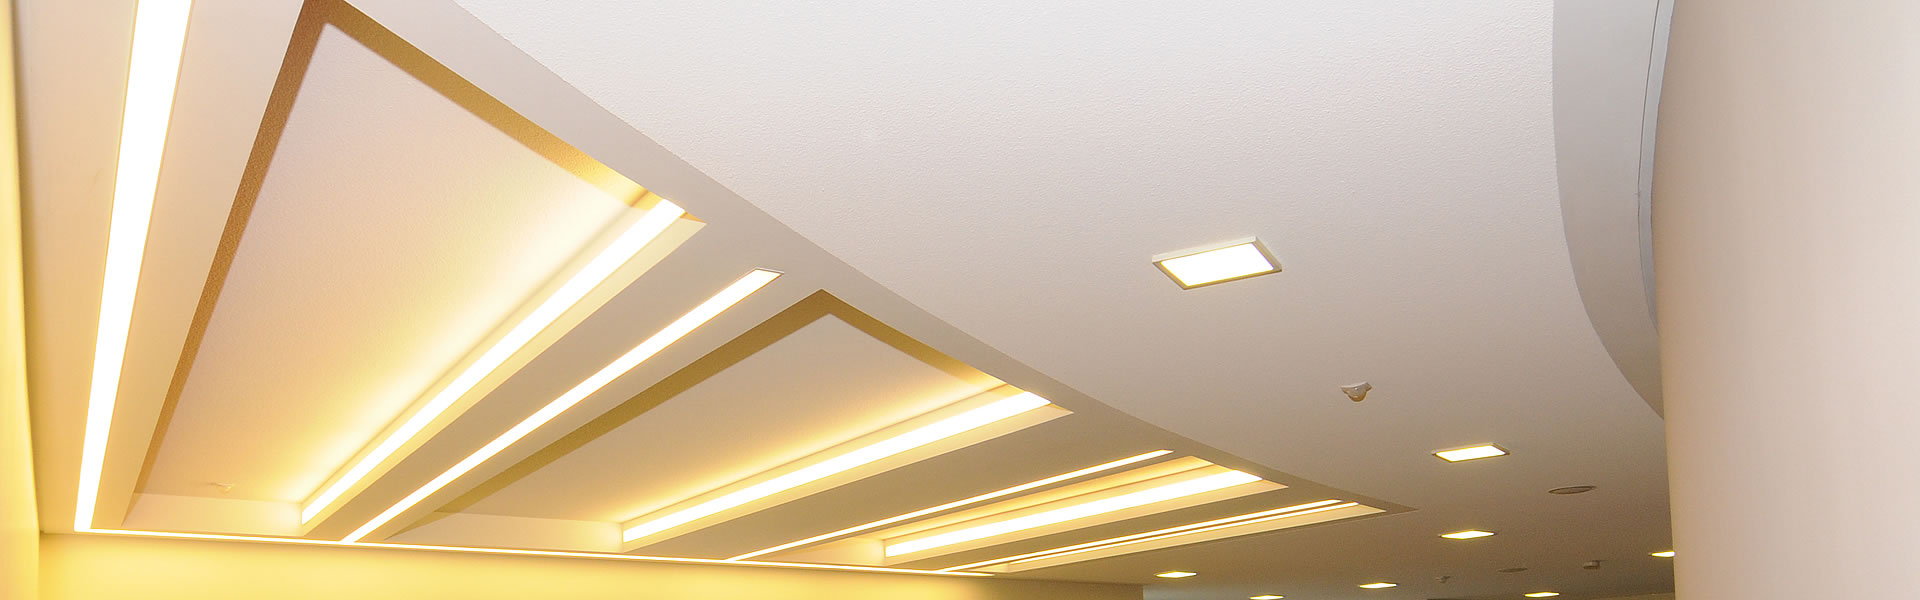 Vogl Toptec Acoustic Plaster Ceilings